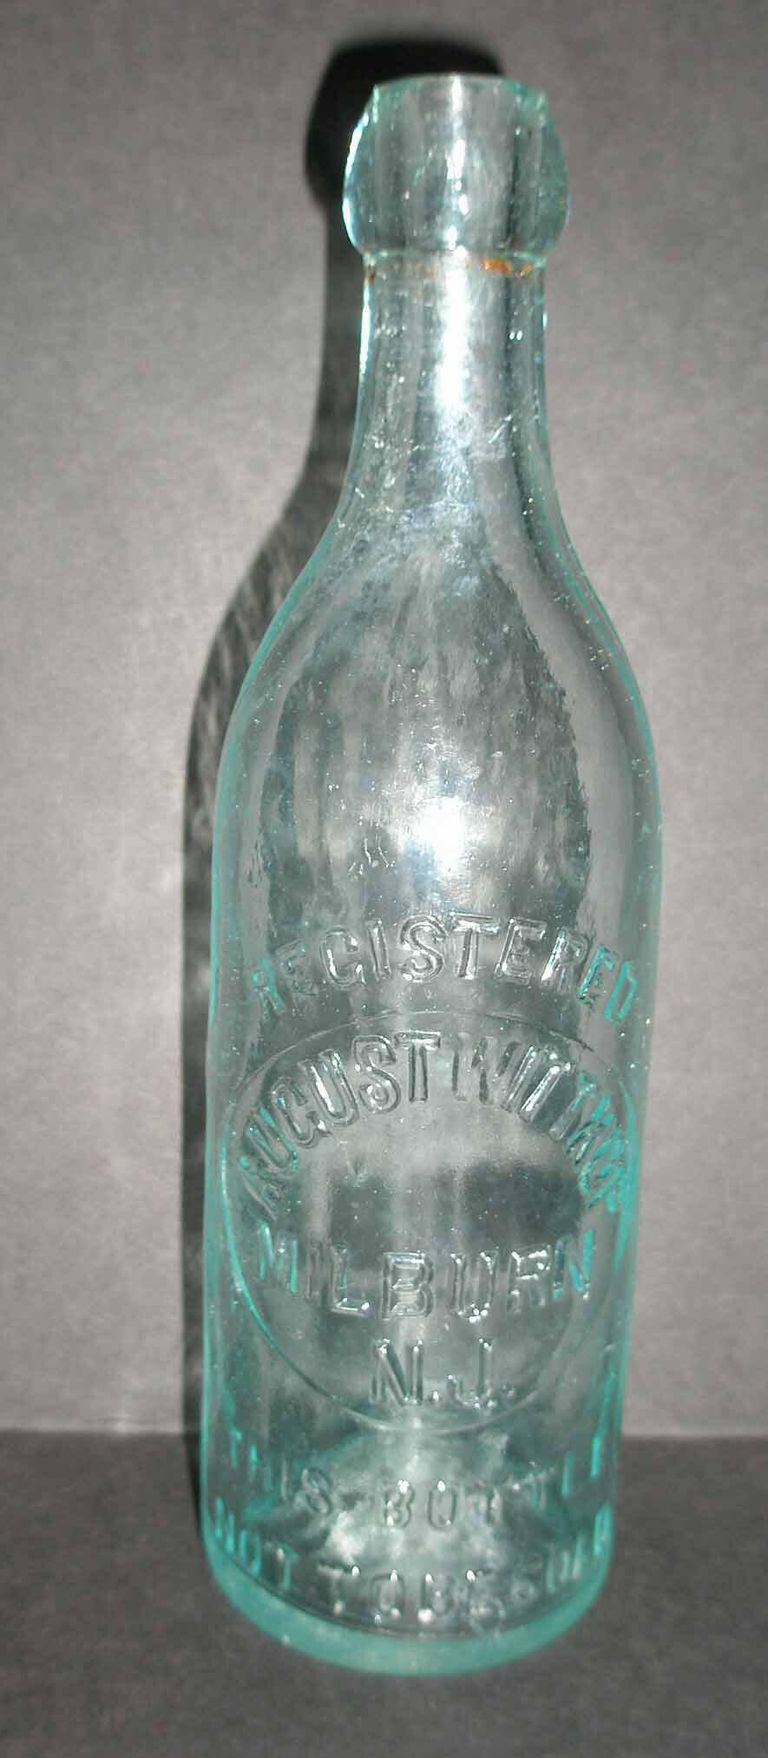          1900 August Wittkop beer bottle picture number 1
   